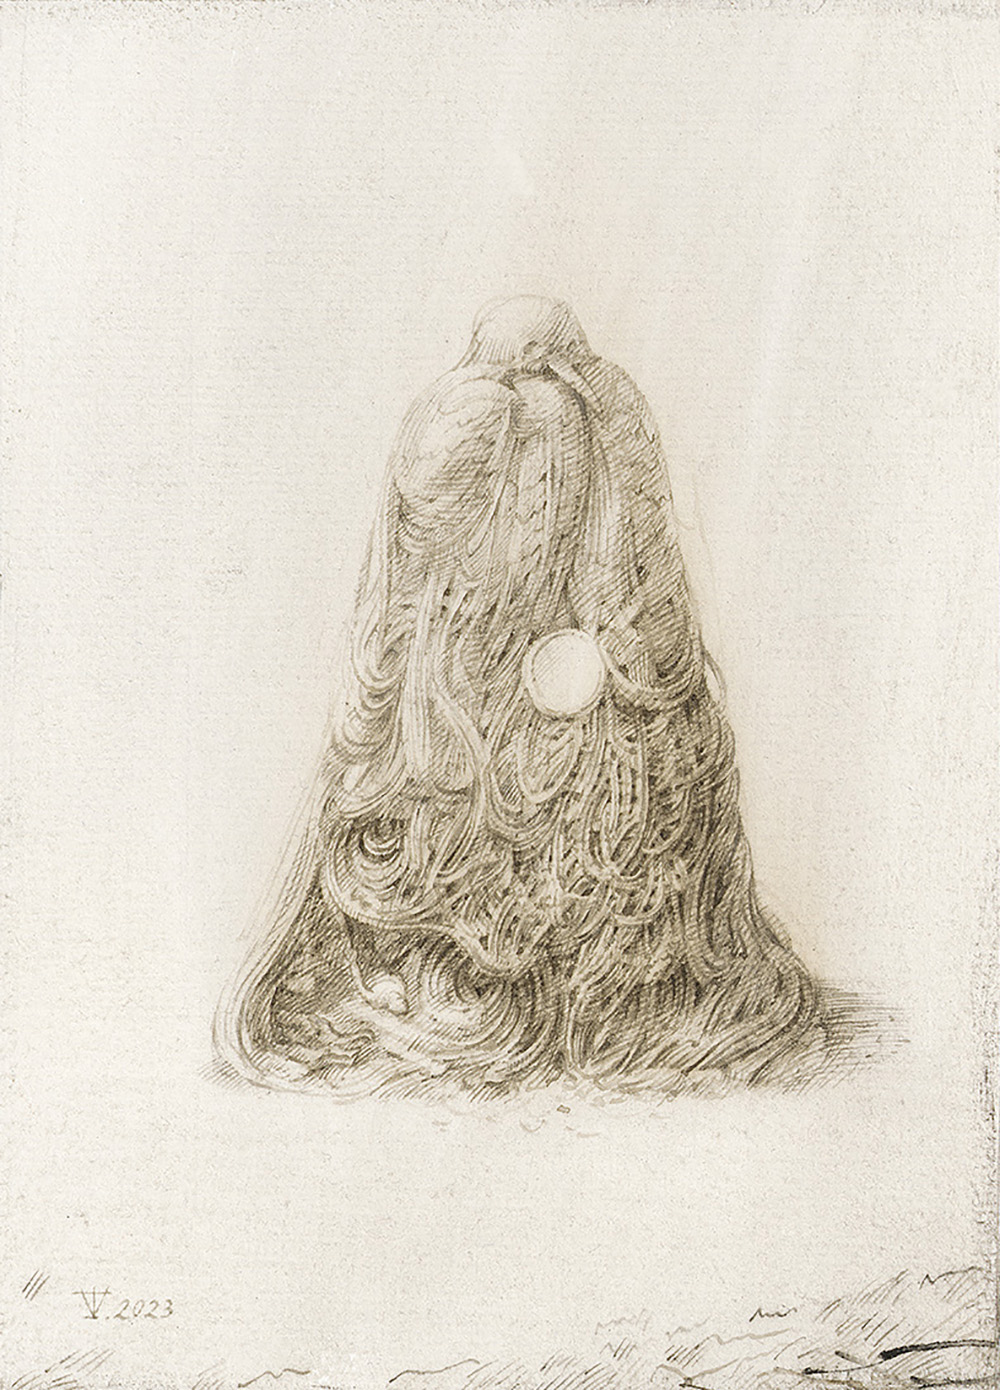 Tinus Vermeersch, Untitled, 2023, penna e inchiostro su carta, cm 18,5x13,5